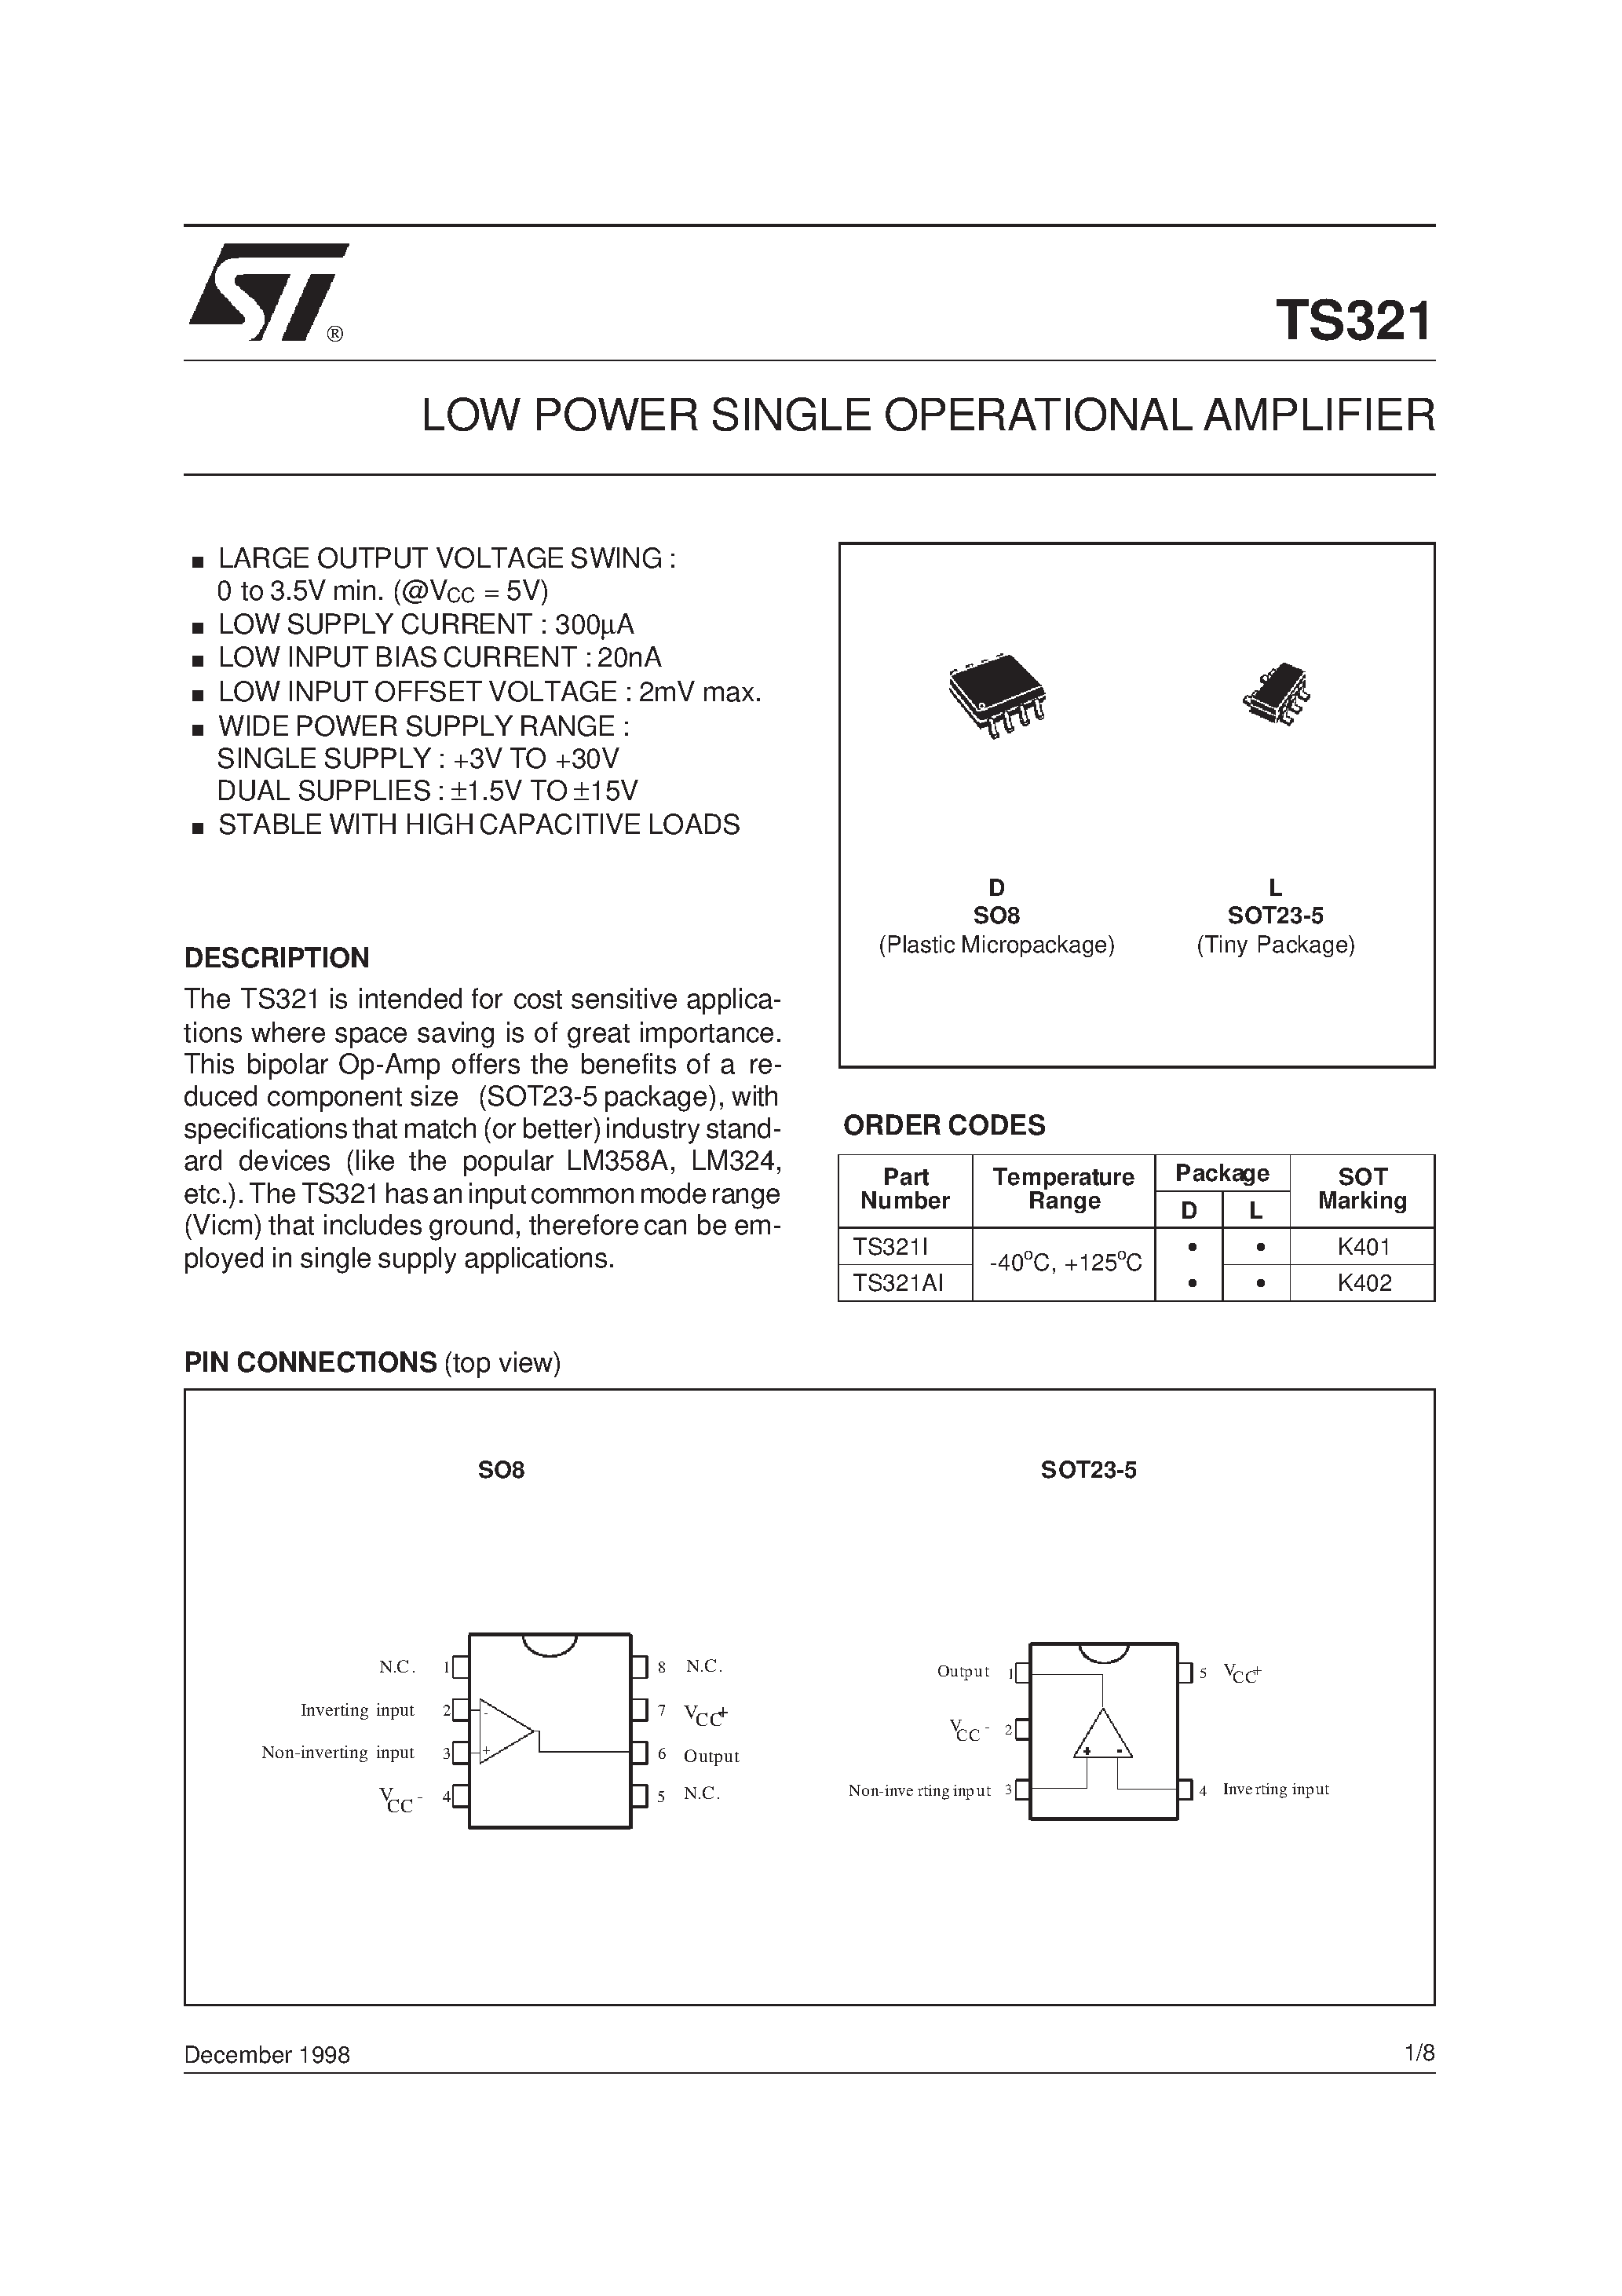 Datasheet TS321I - LOW POWER SINGLE OPERATIONAL AMPLIFIER page 1